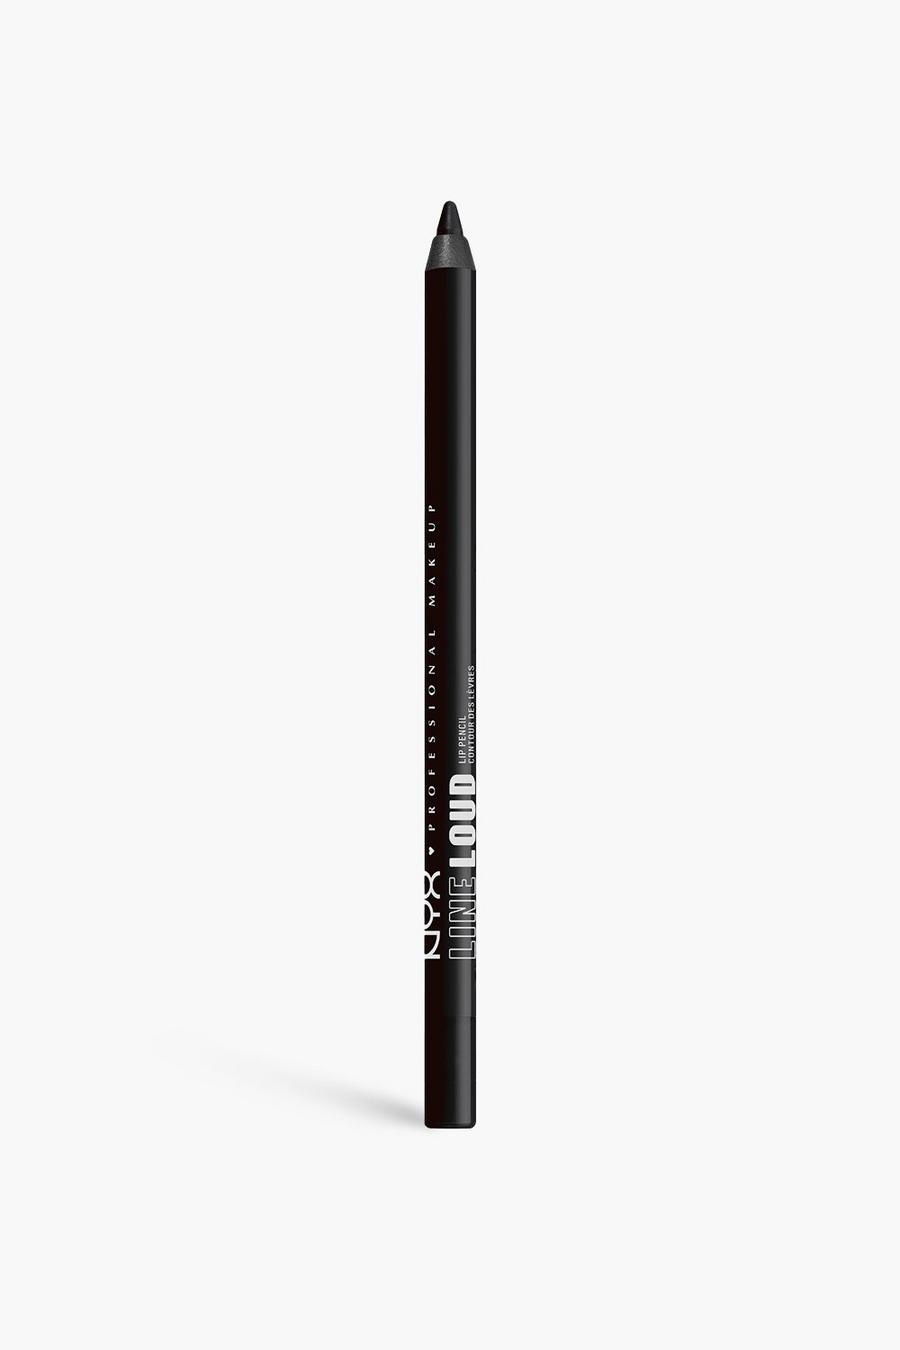 Evil genius Nyx Professional Makeup Longwear Line Loud Matte Lip Liner